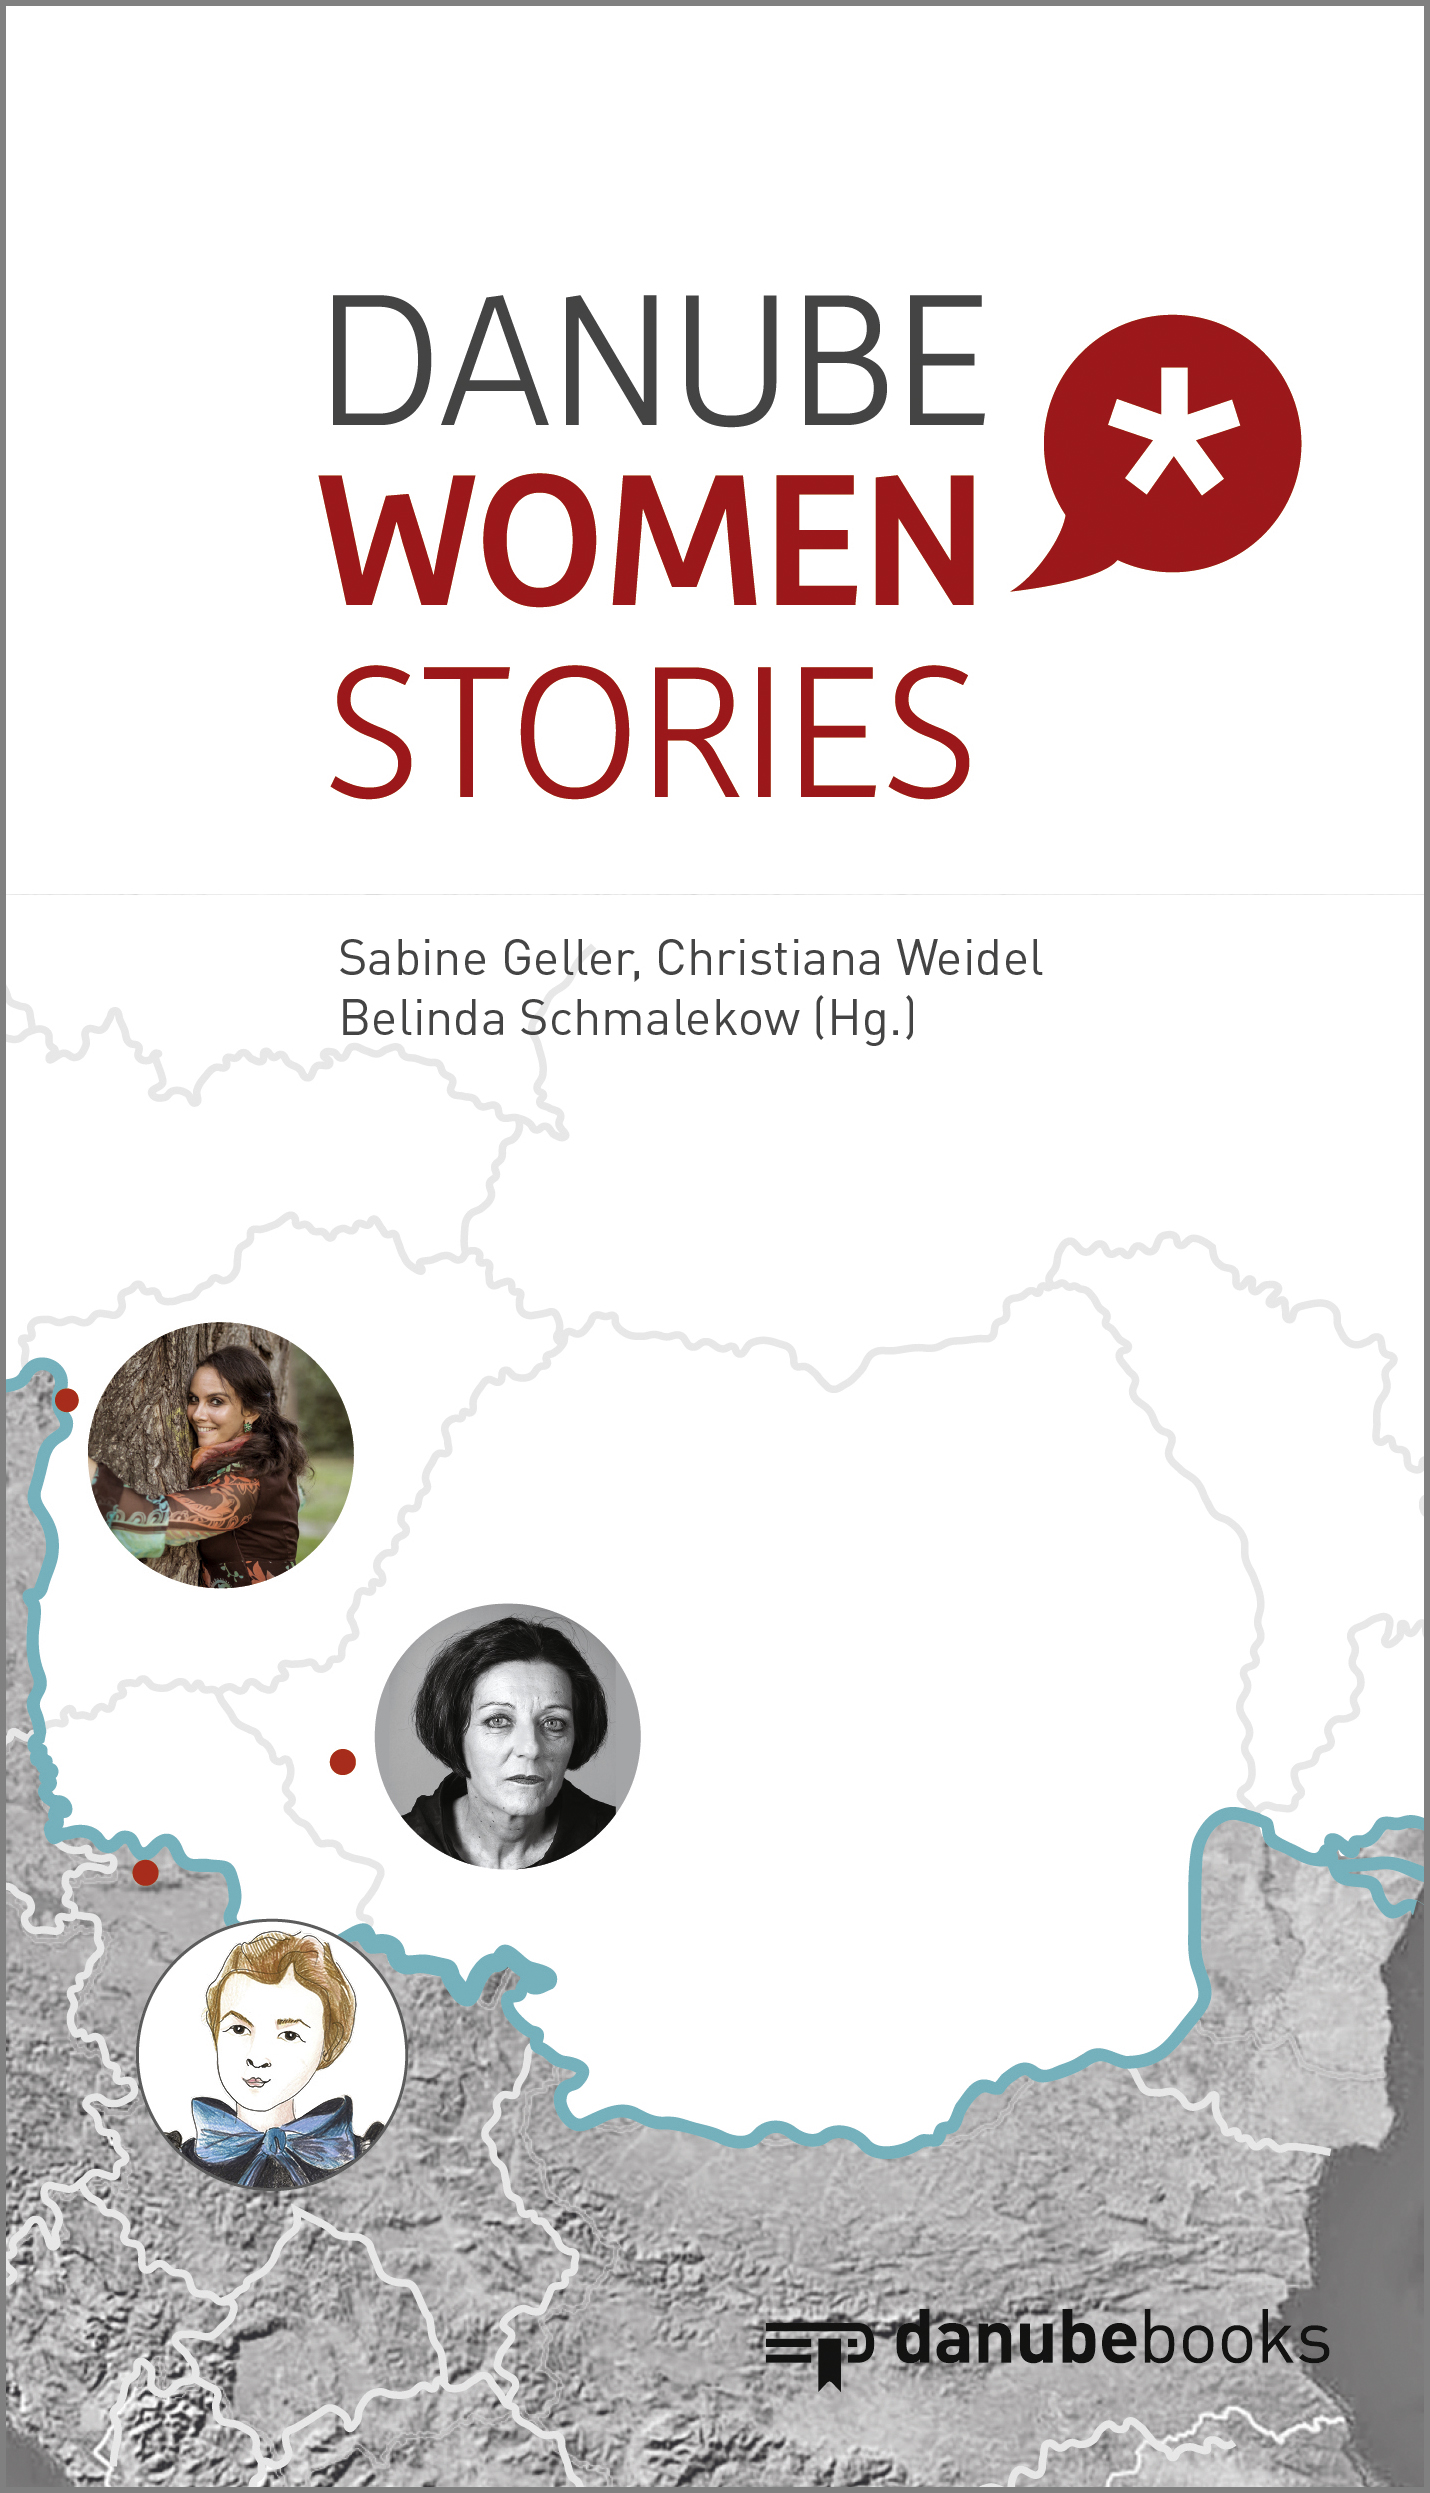 Danube Women Stories Vol. 1